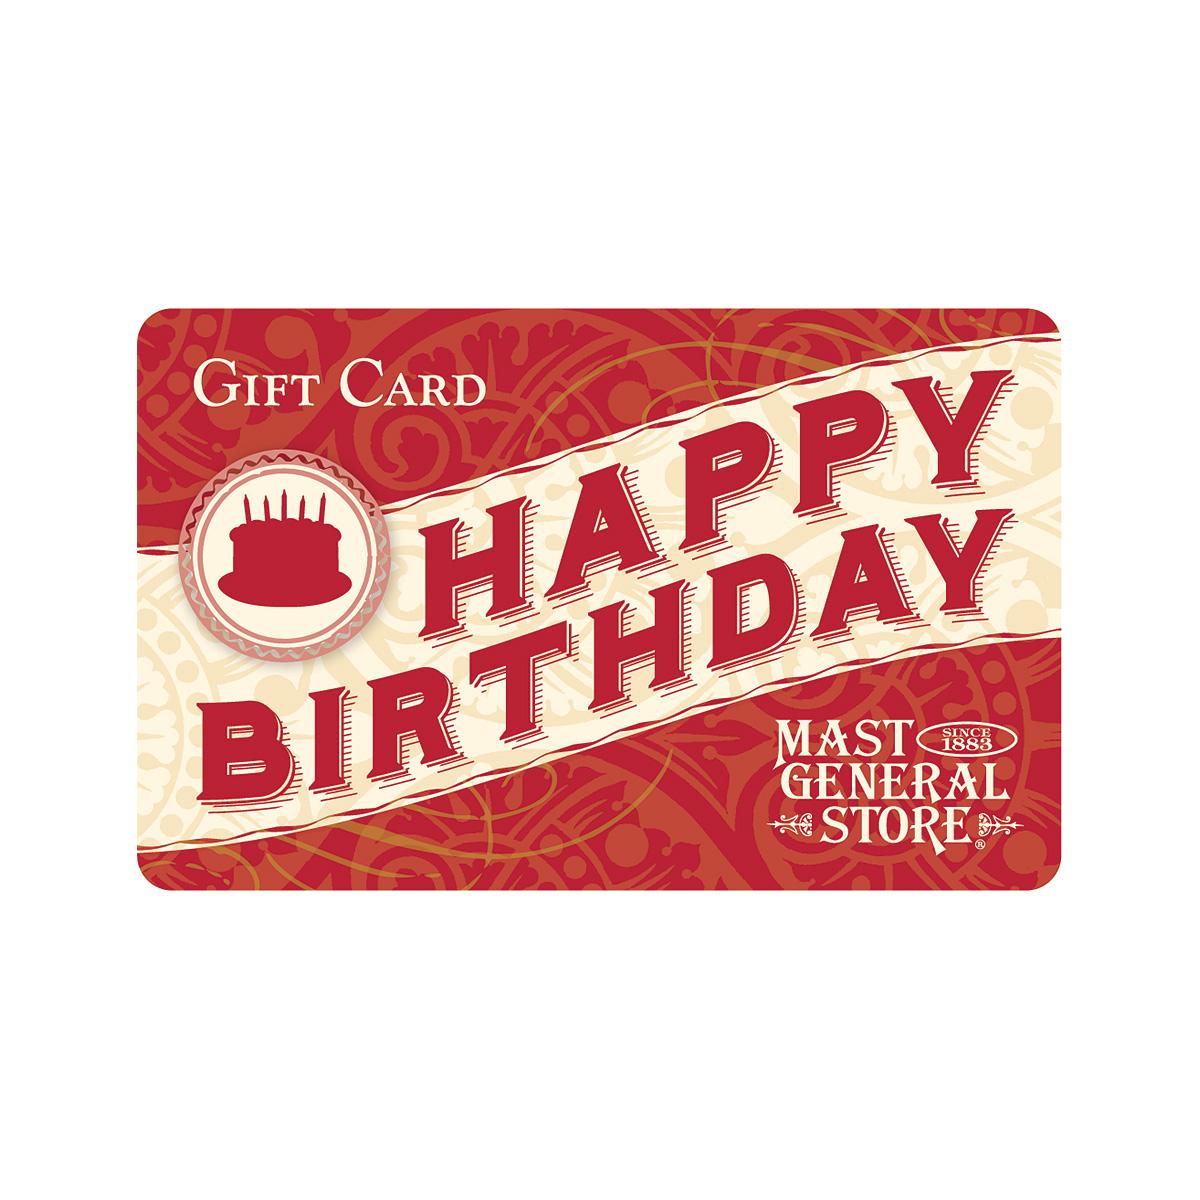  Mast General Store Gift Card - Happy Birthday